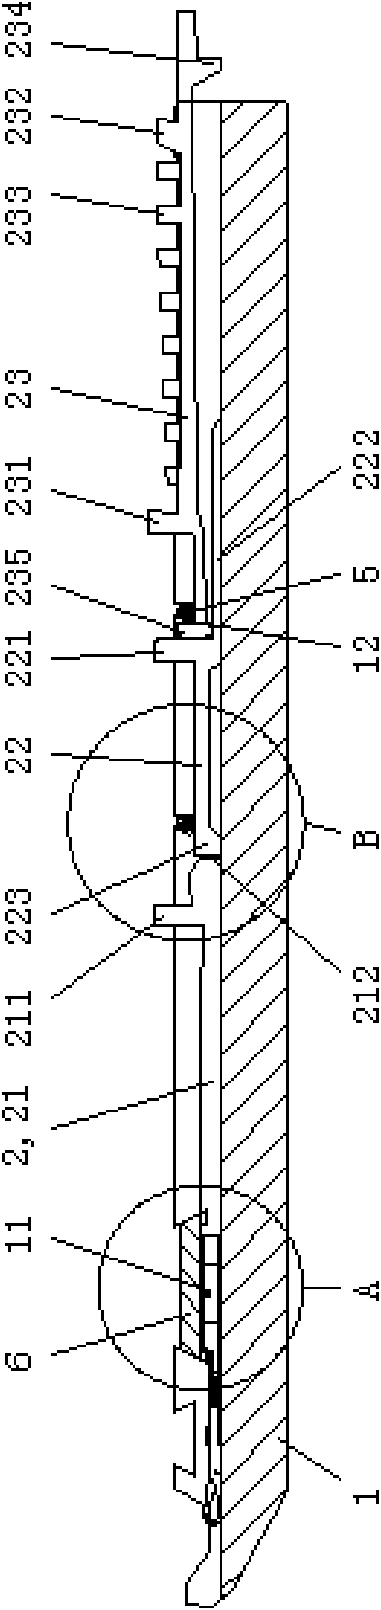 Walk-needle control mechanism of computer transversal knitting machine